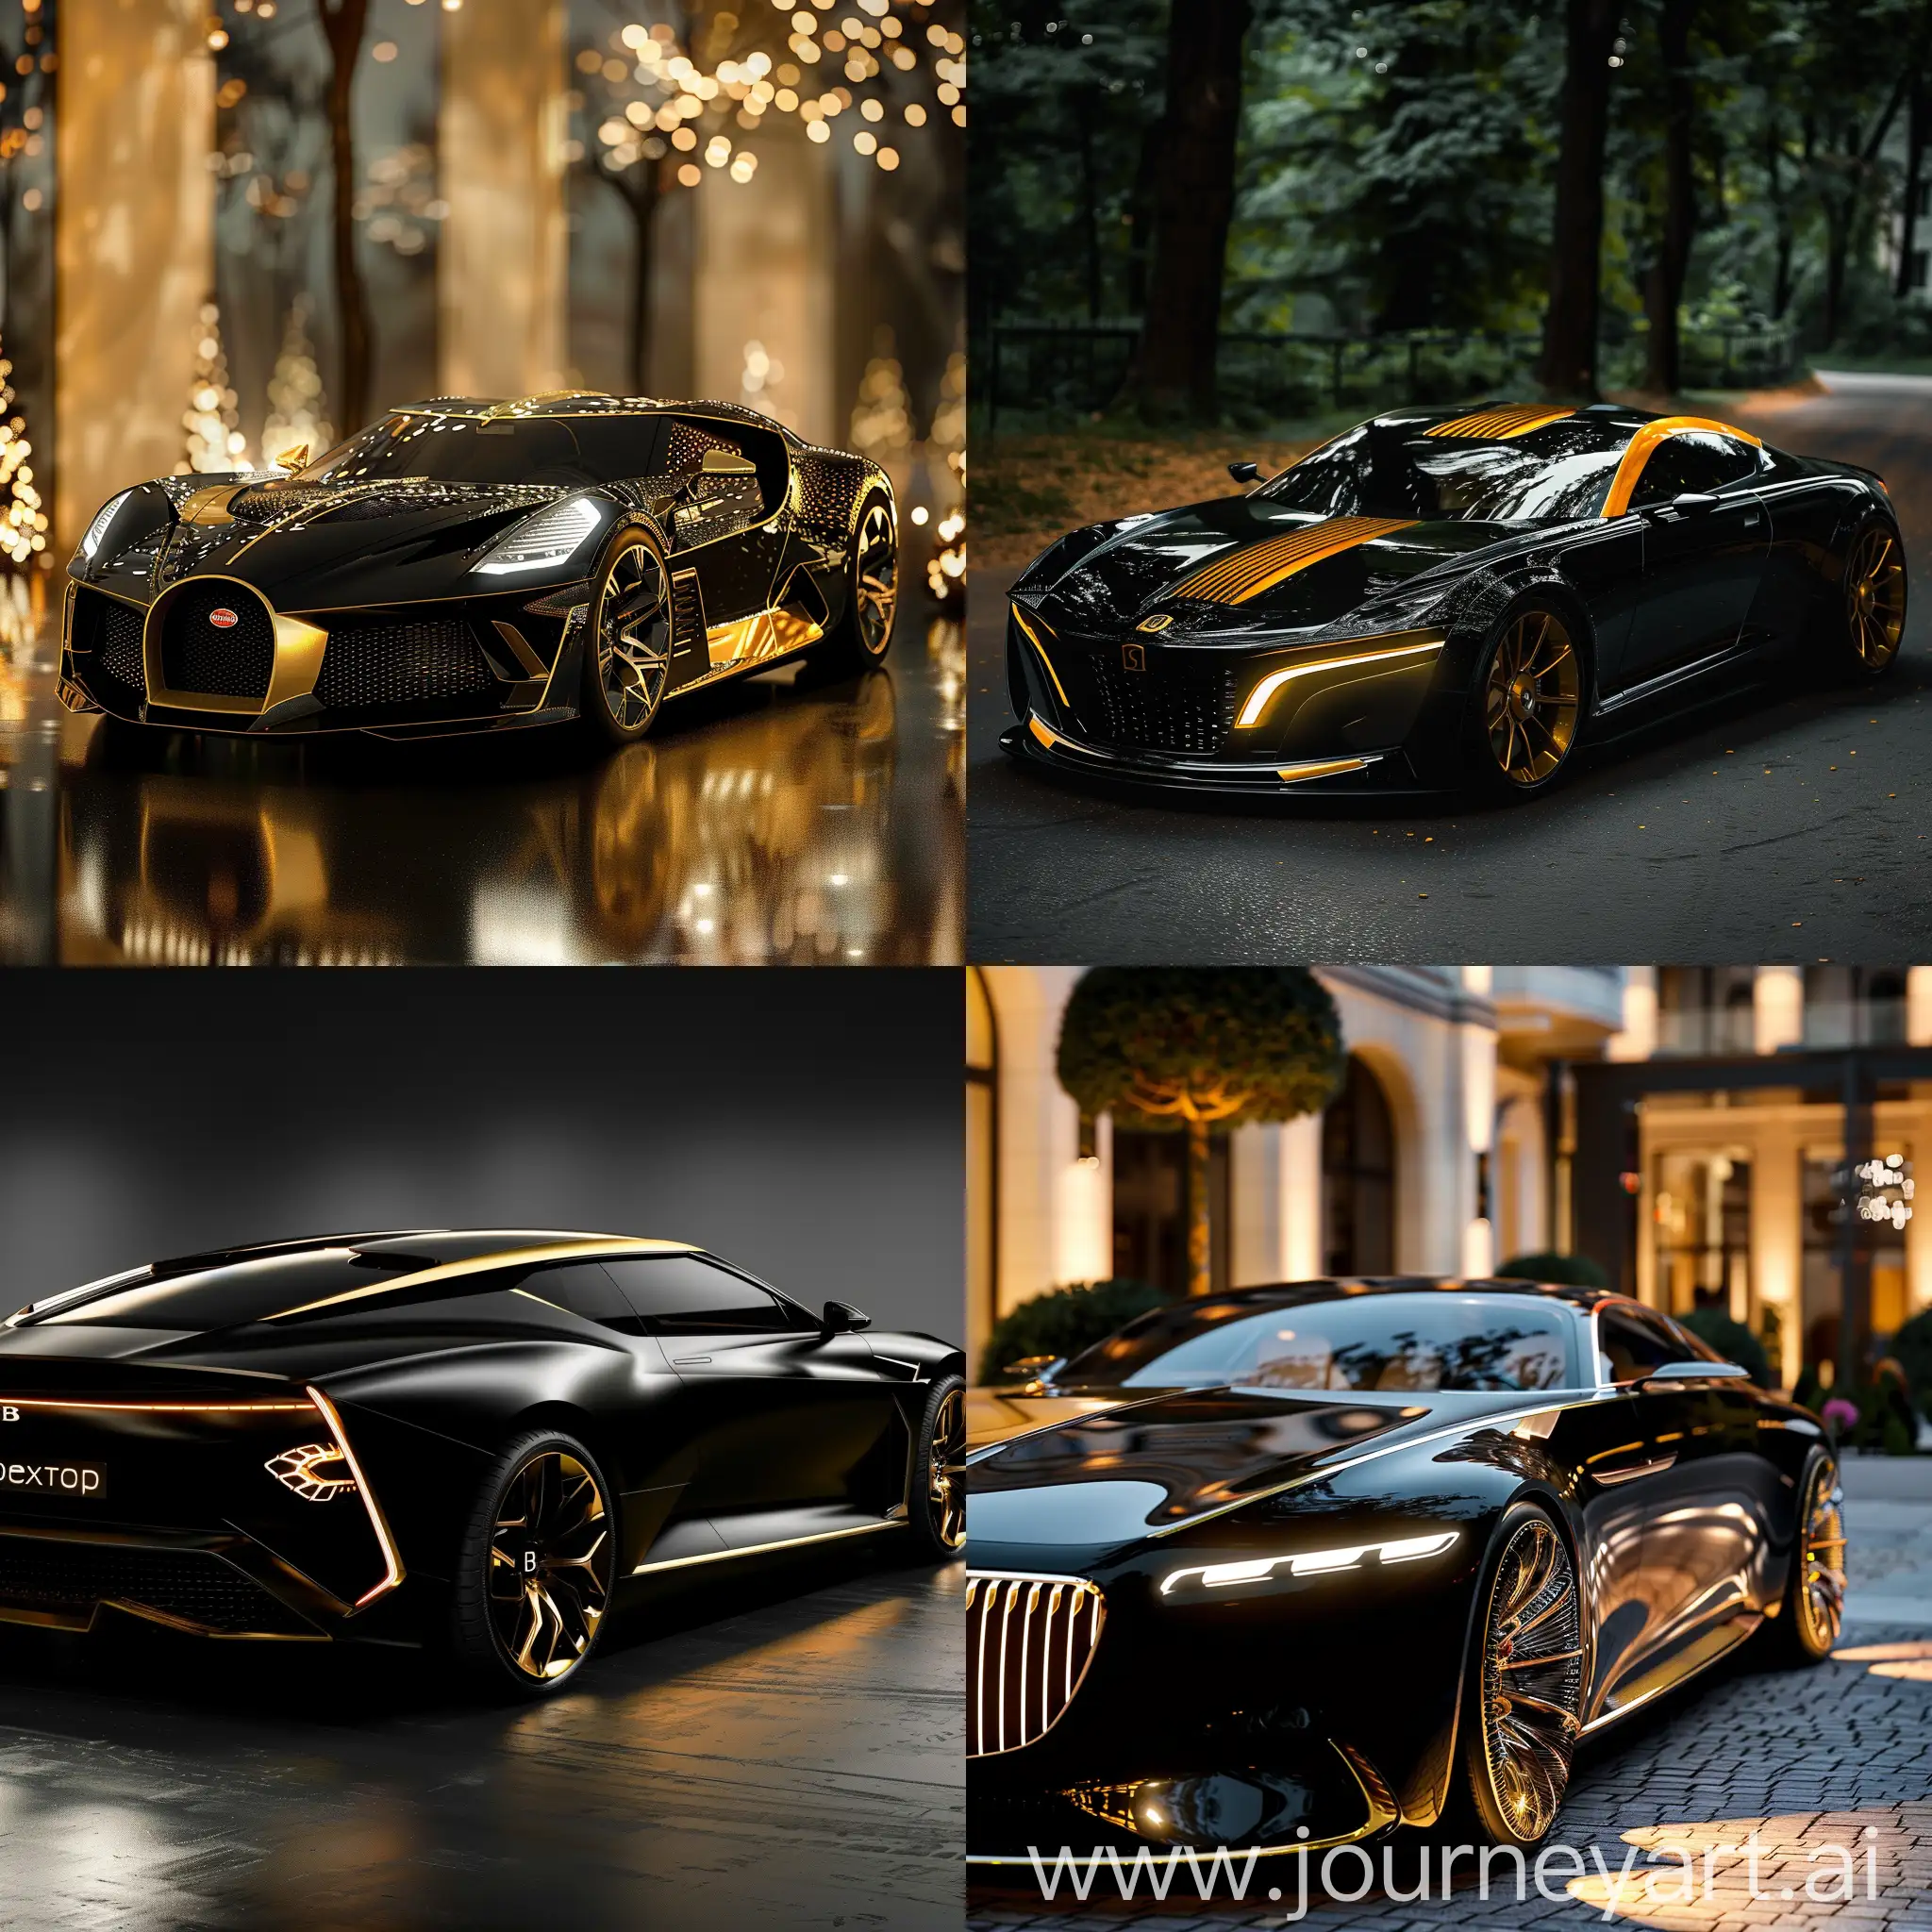 Luxury-Car-in-Black-and-Golden-Colors-Ultra-HD-Desktop-Wallpaper